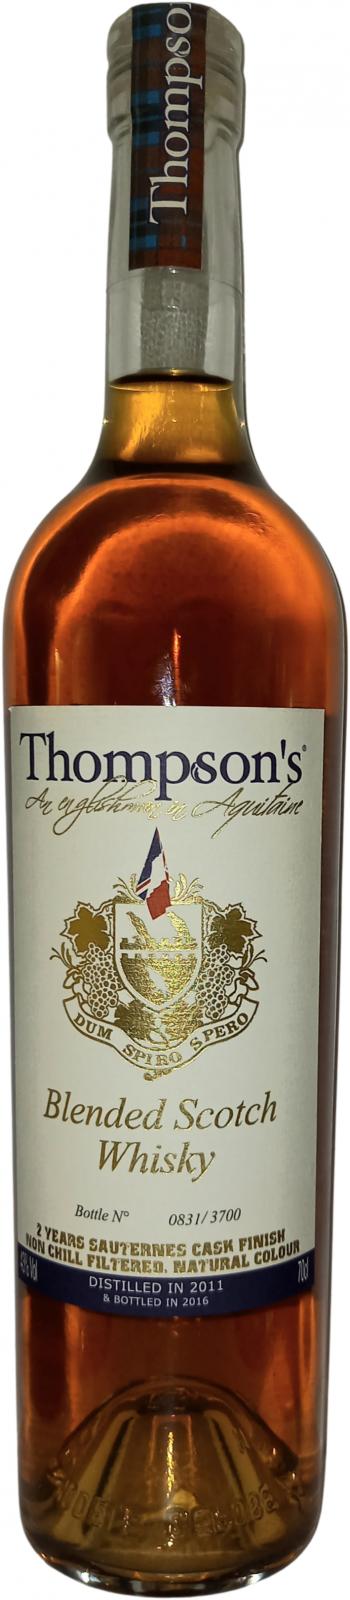 Thompson's 2011 Tho Blended Scotch Whisky Sauternes Cask Finish 43% 700ml